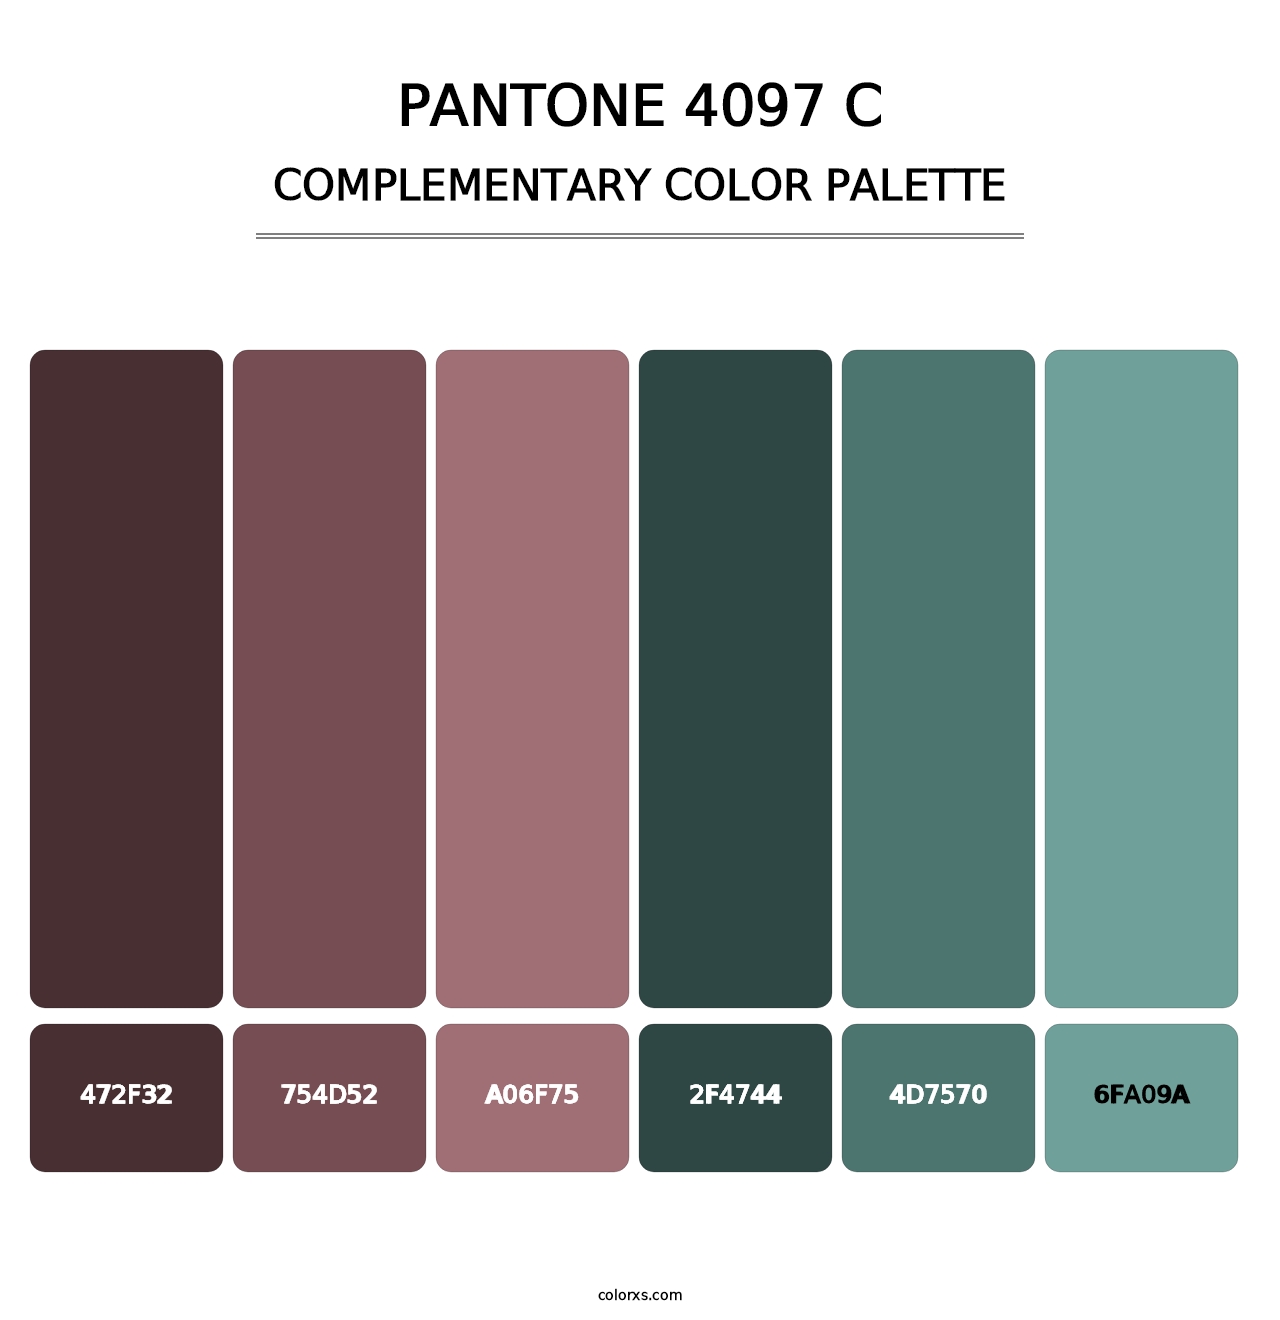 PANTONE 4097 C - Complementary Color Palette